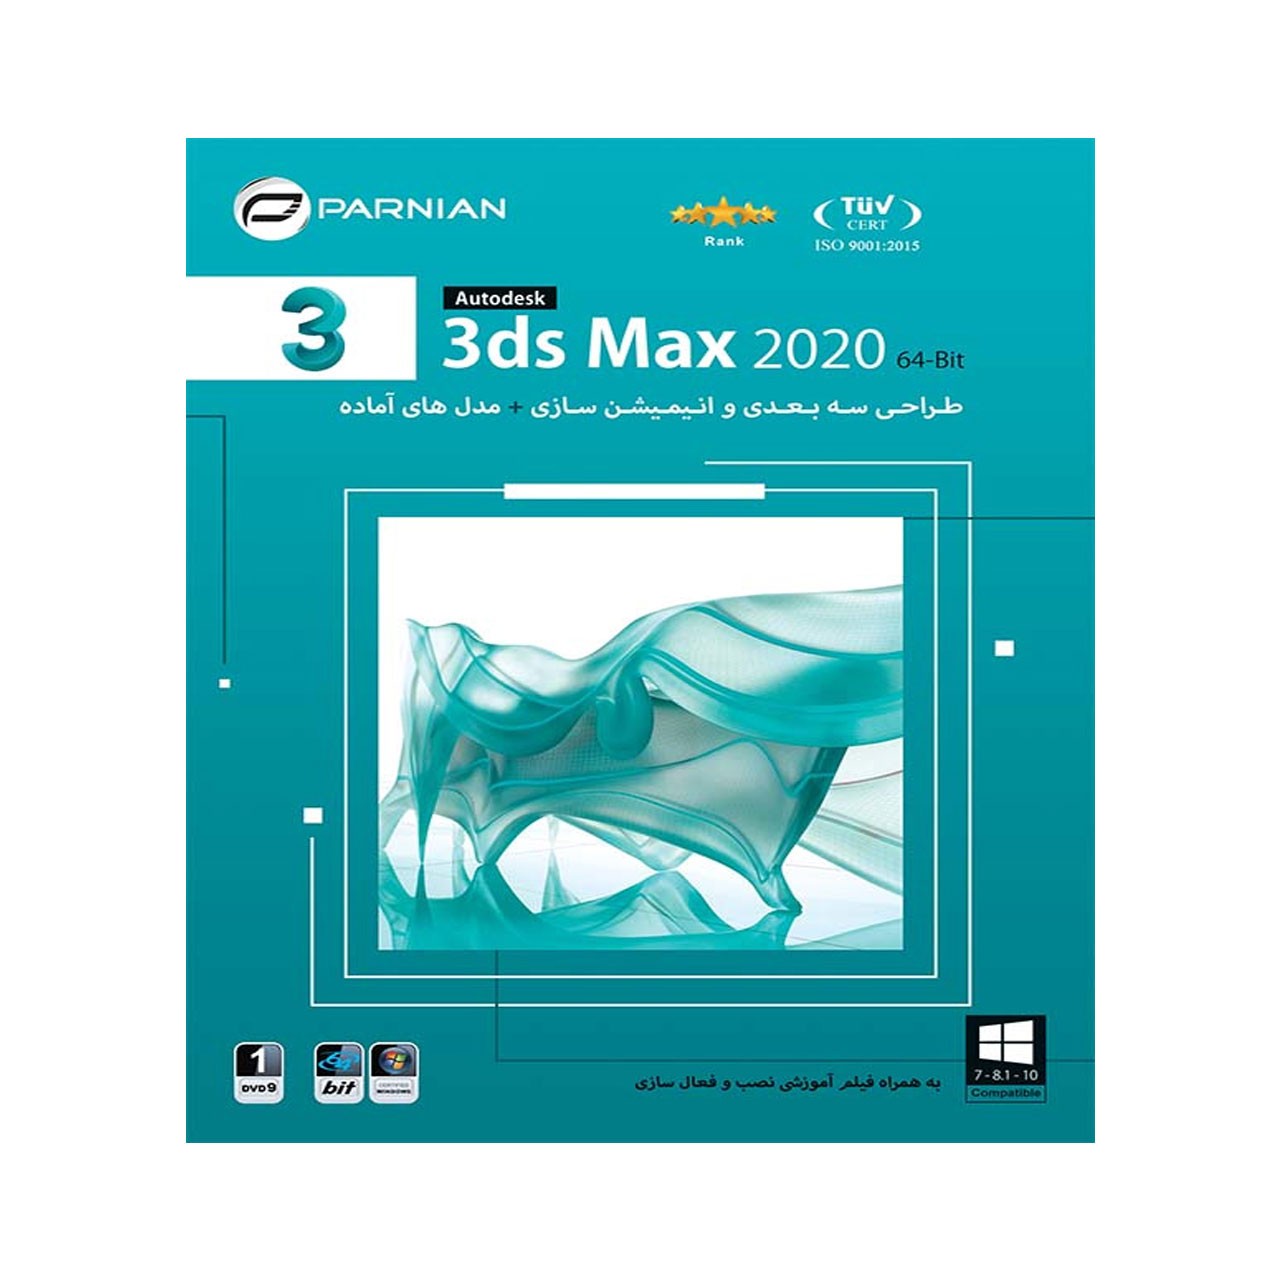 نرم افزار Autodesk 3ds Max 2020 

Autodesk 3ds Max 2020